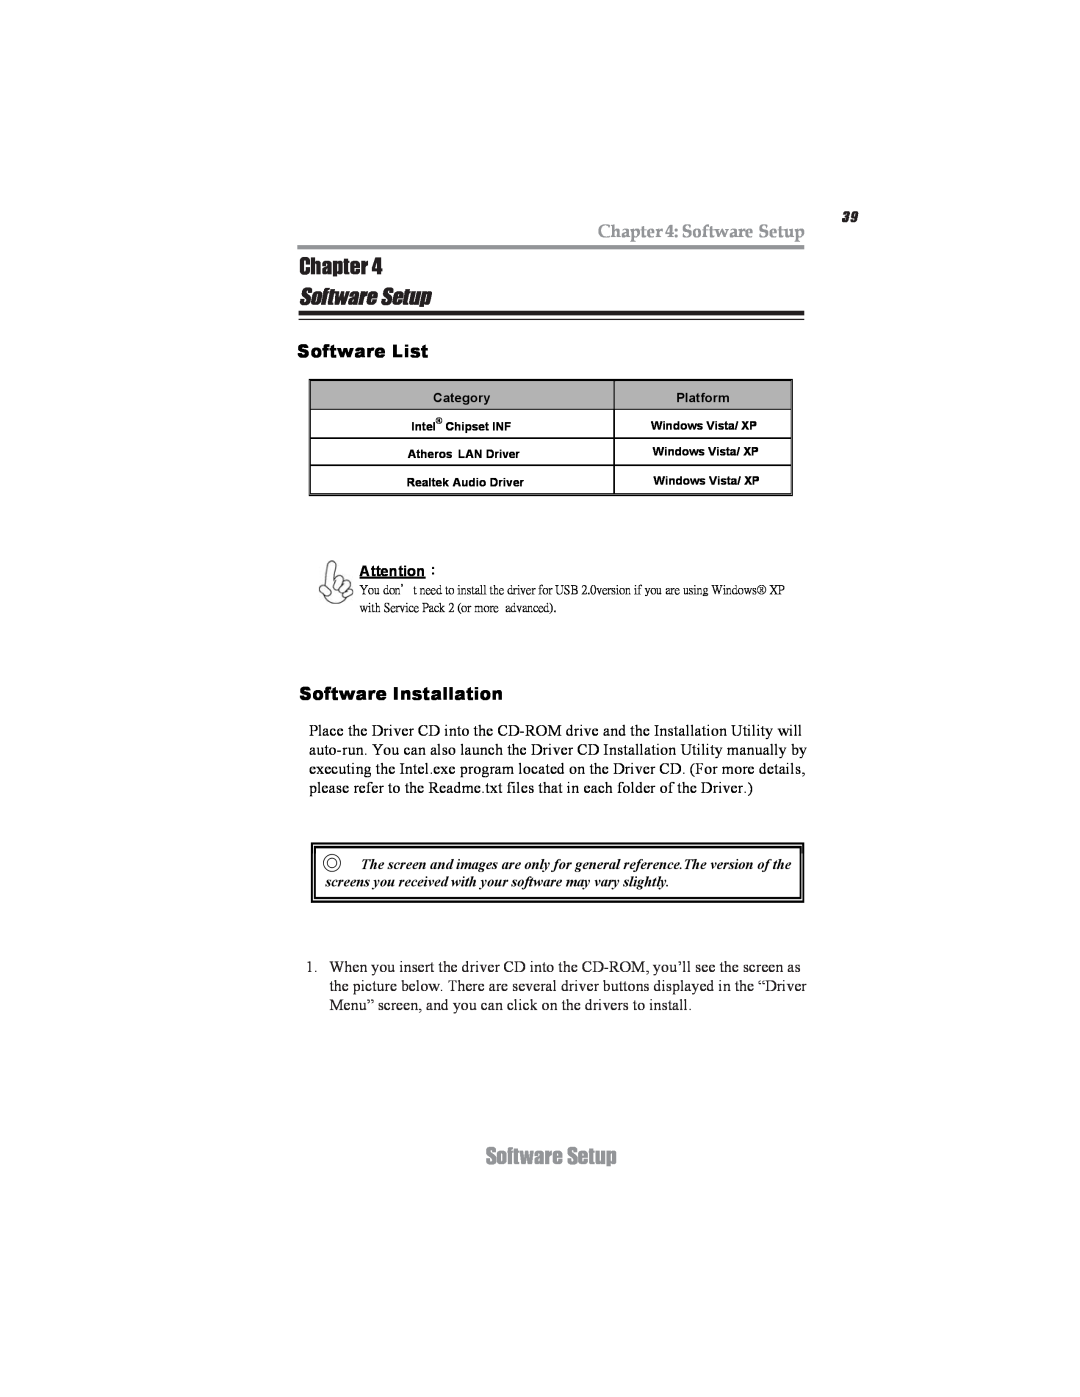 Microsoft PXP43 manual Software Setup, Chapter, Software List, Software Installation 